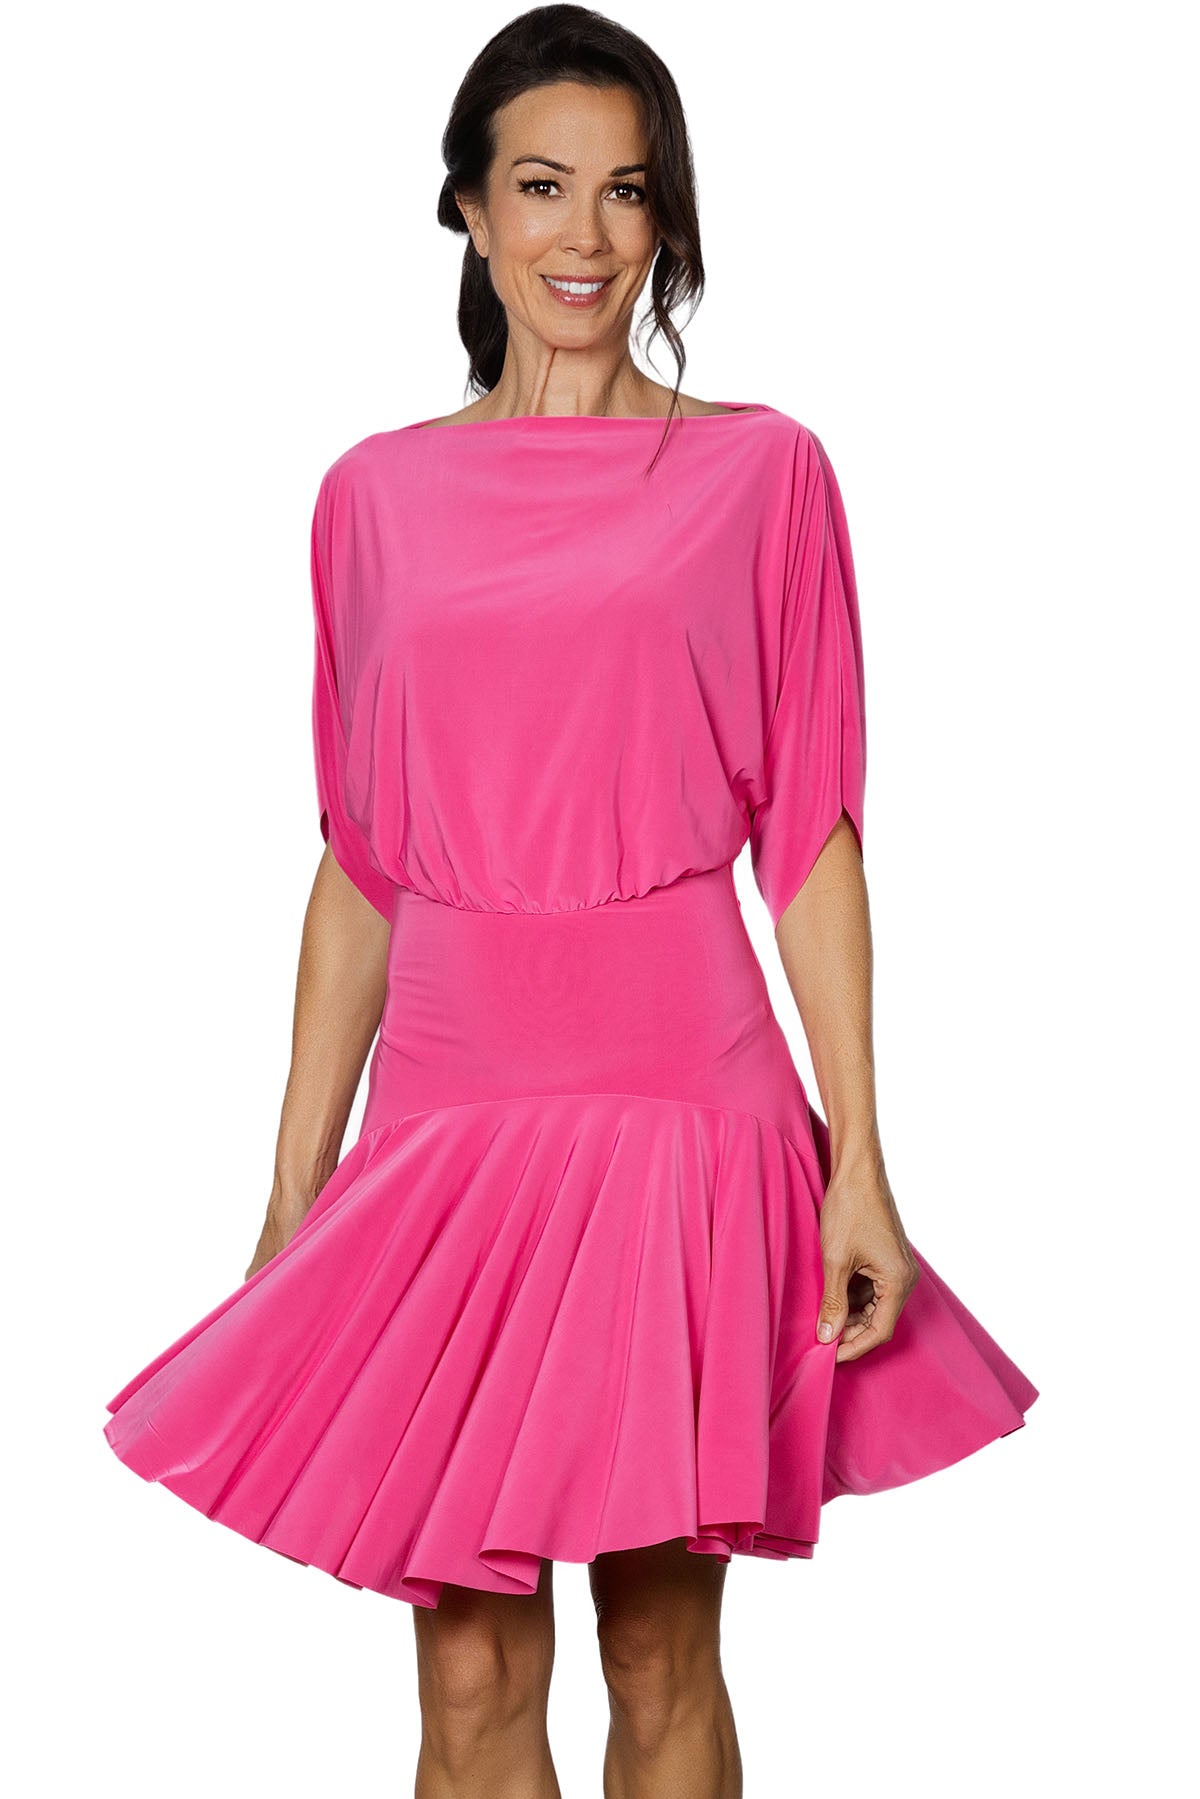 Women's pink Latin dress with flowy skirt